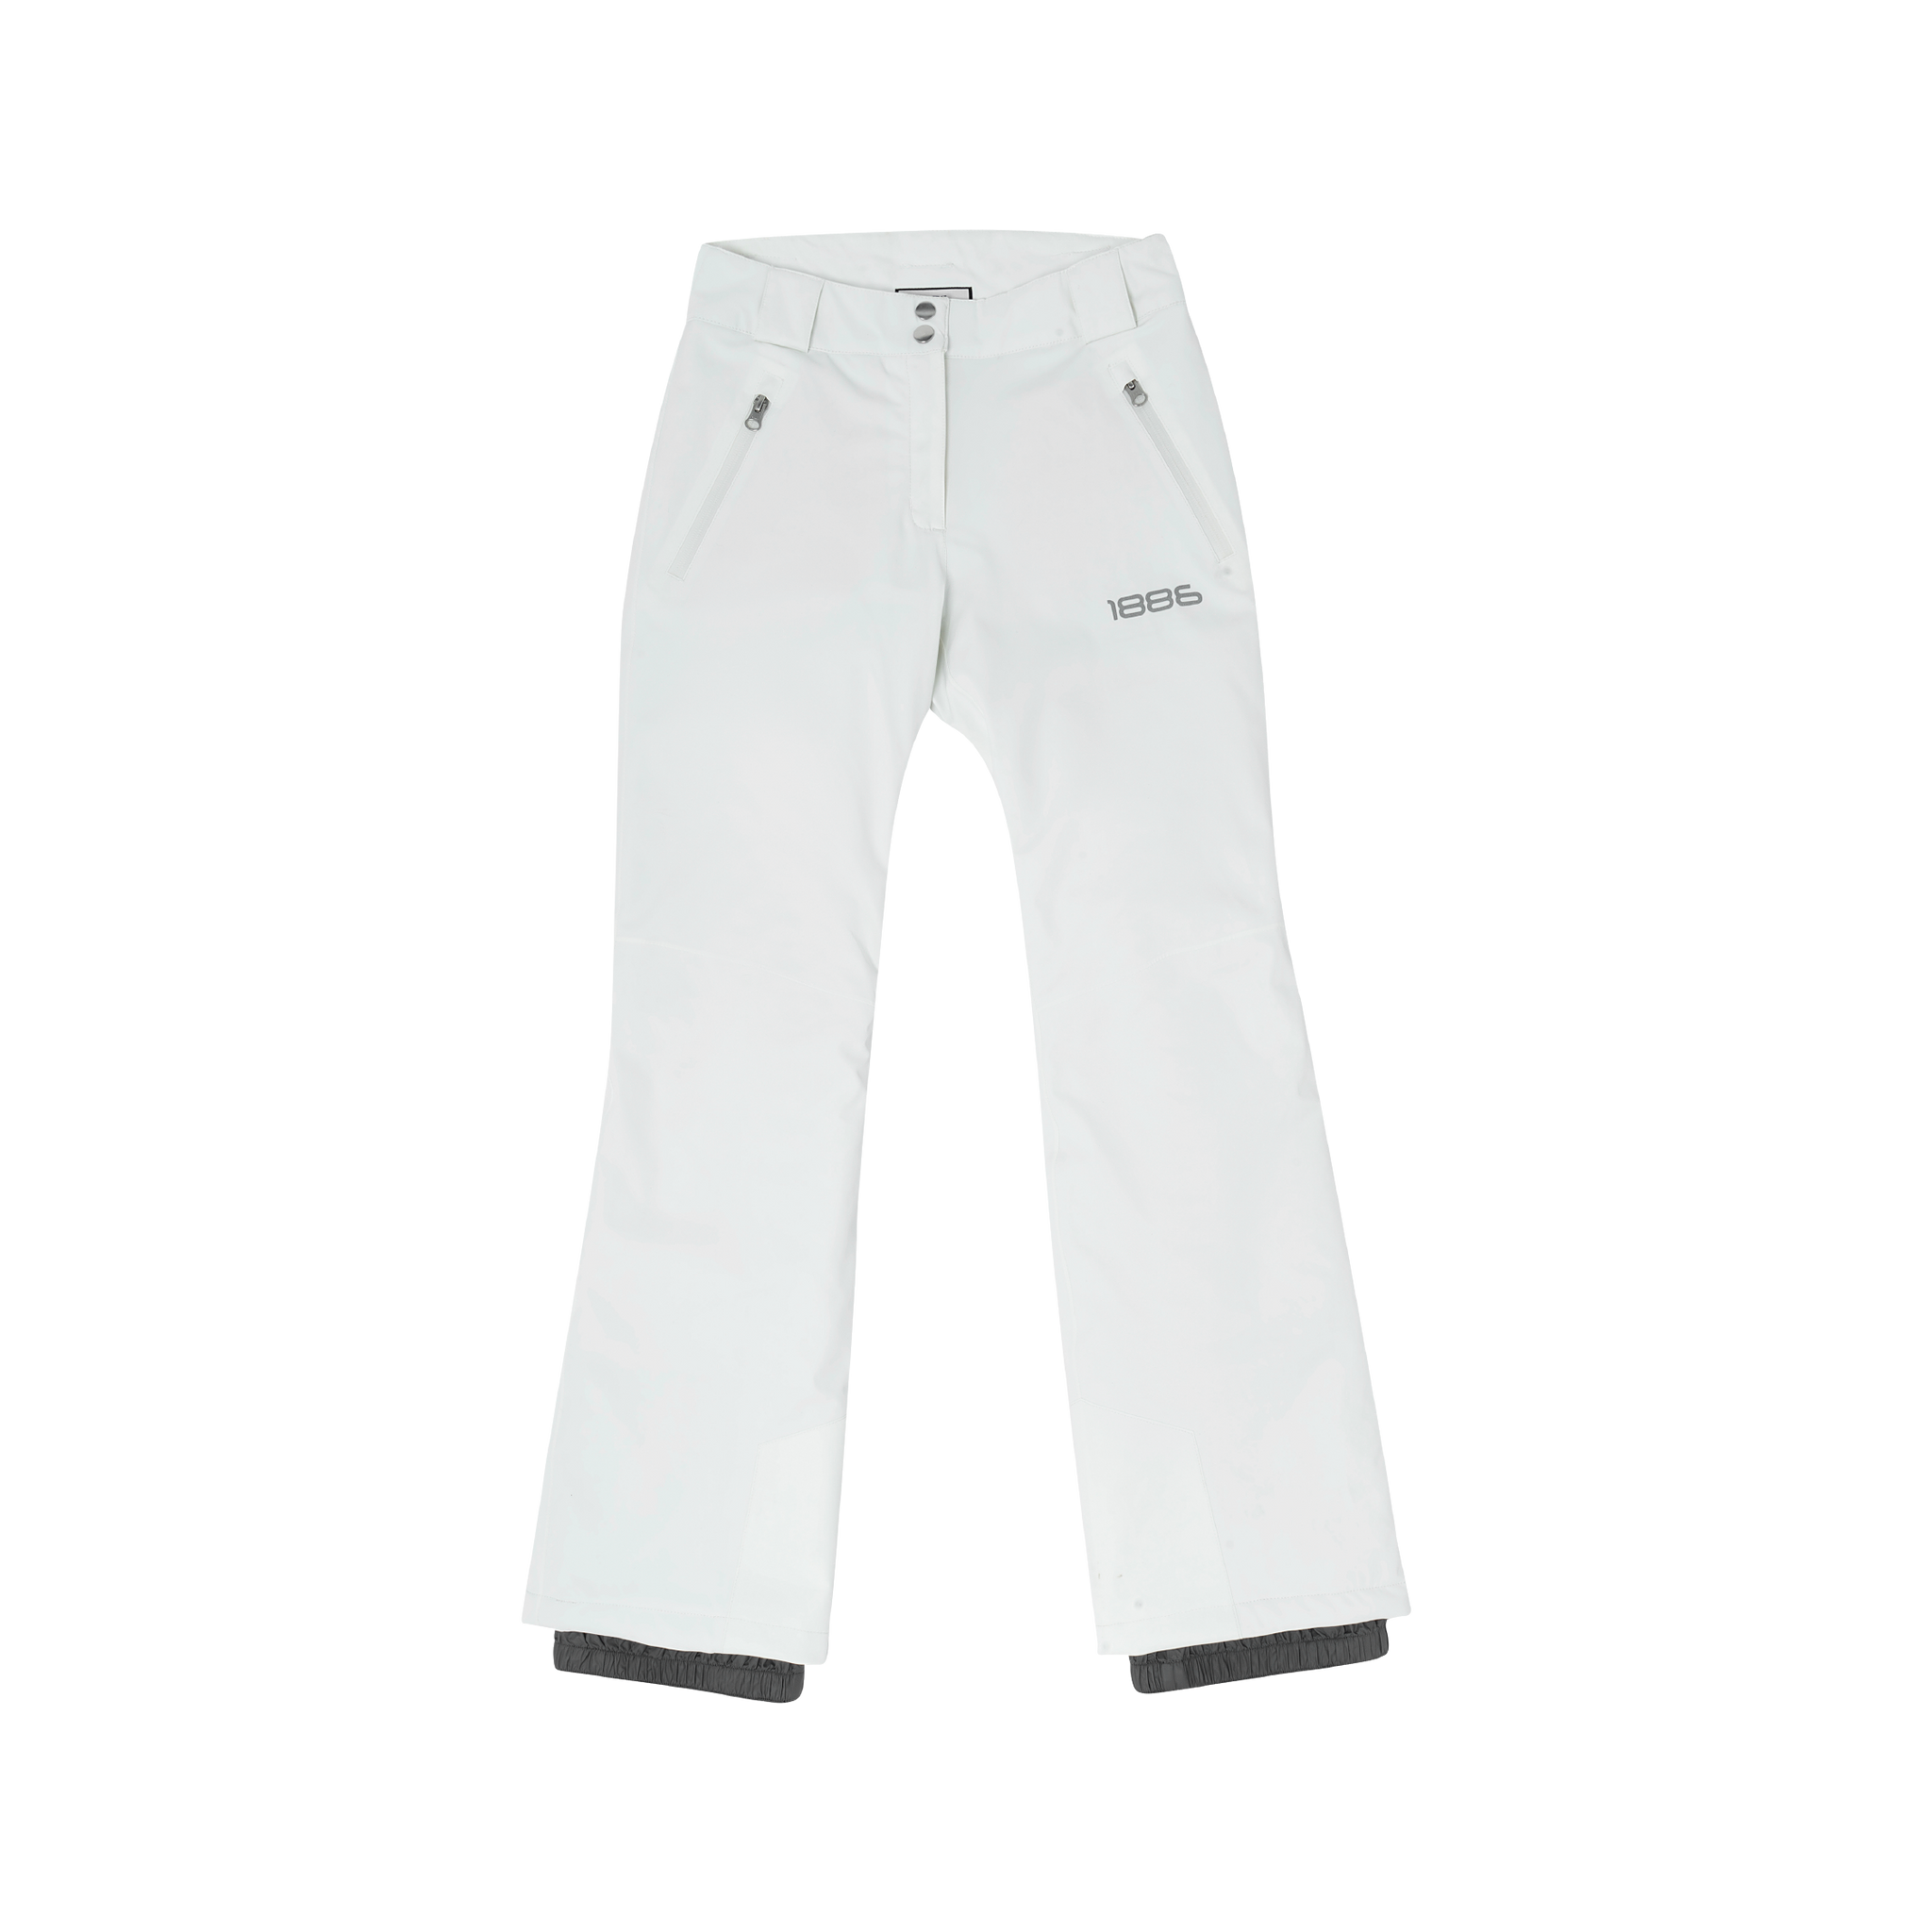 1886 Ski Pants In White - White